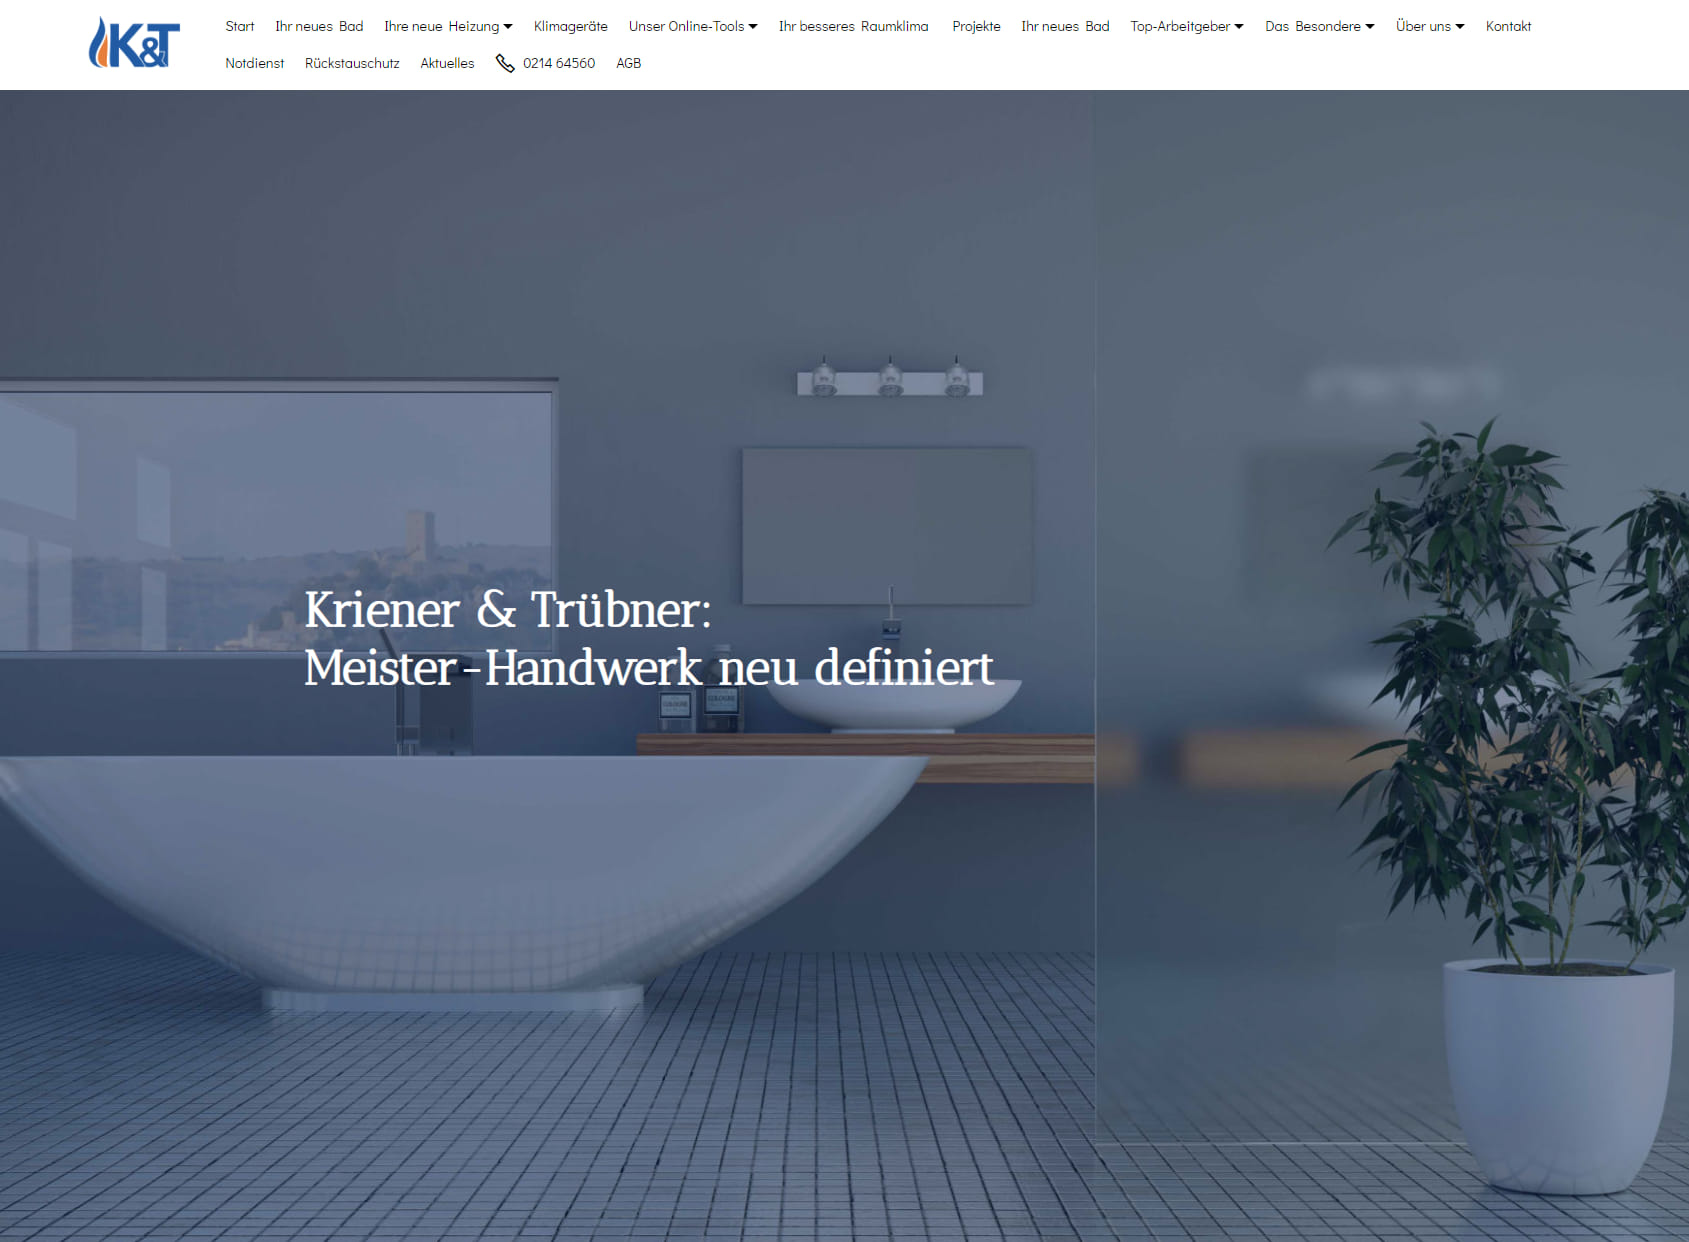 Kriener & Trübner GmbH